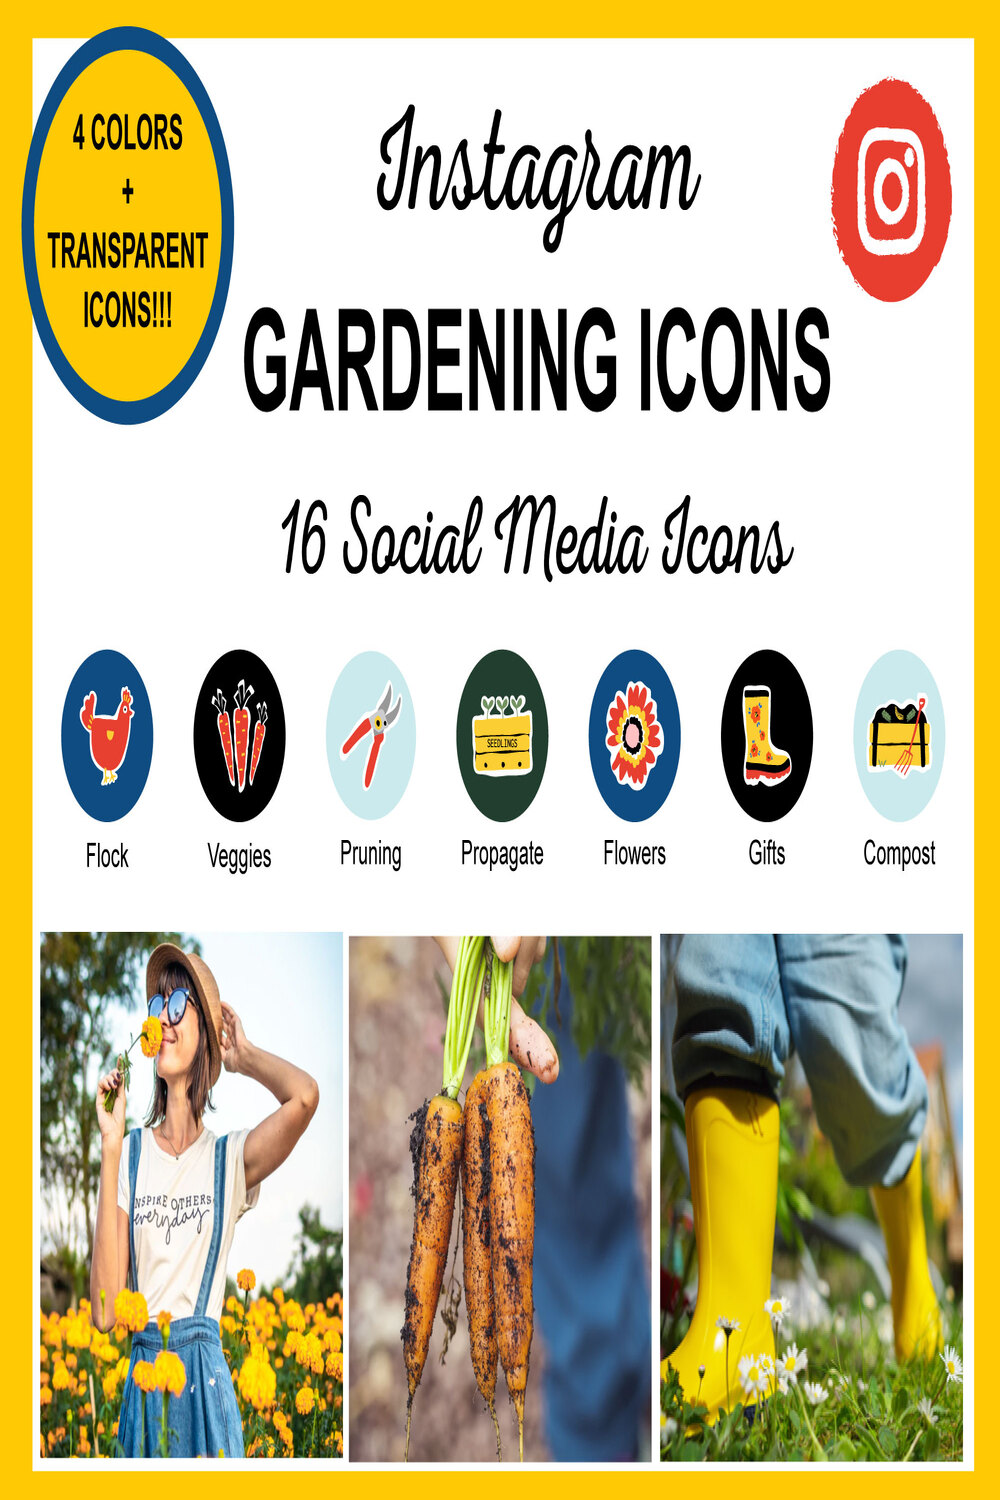 Instagram Gardening Icons (16 Social Media Icons) pinterest image.